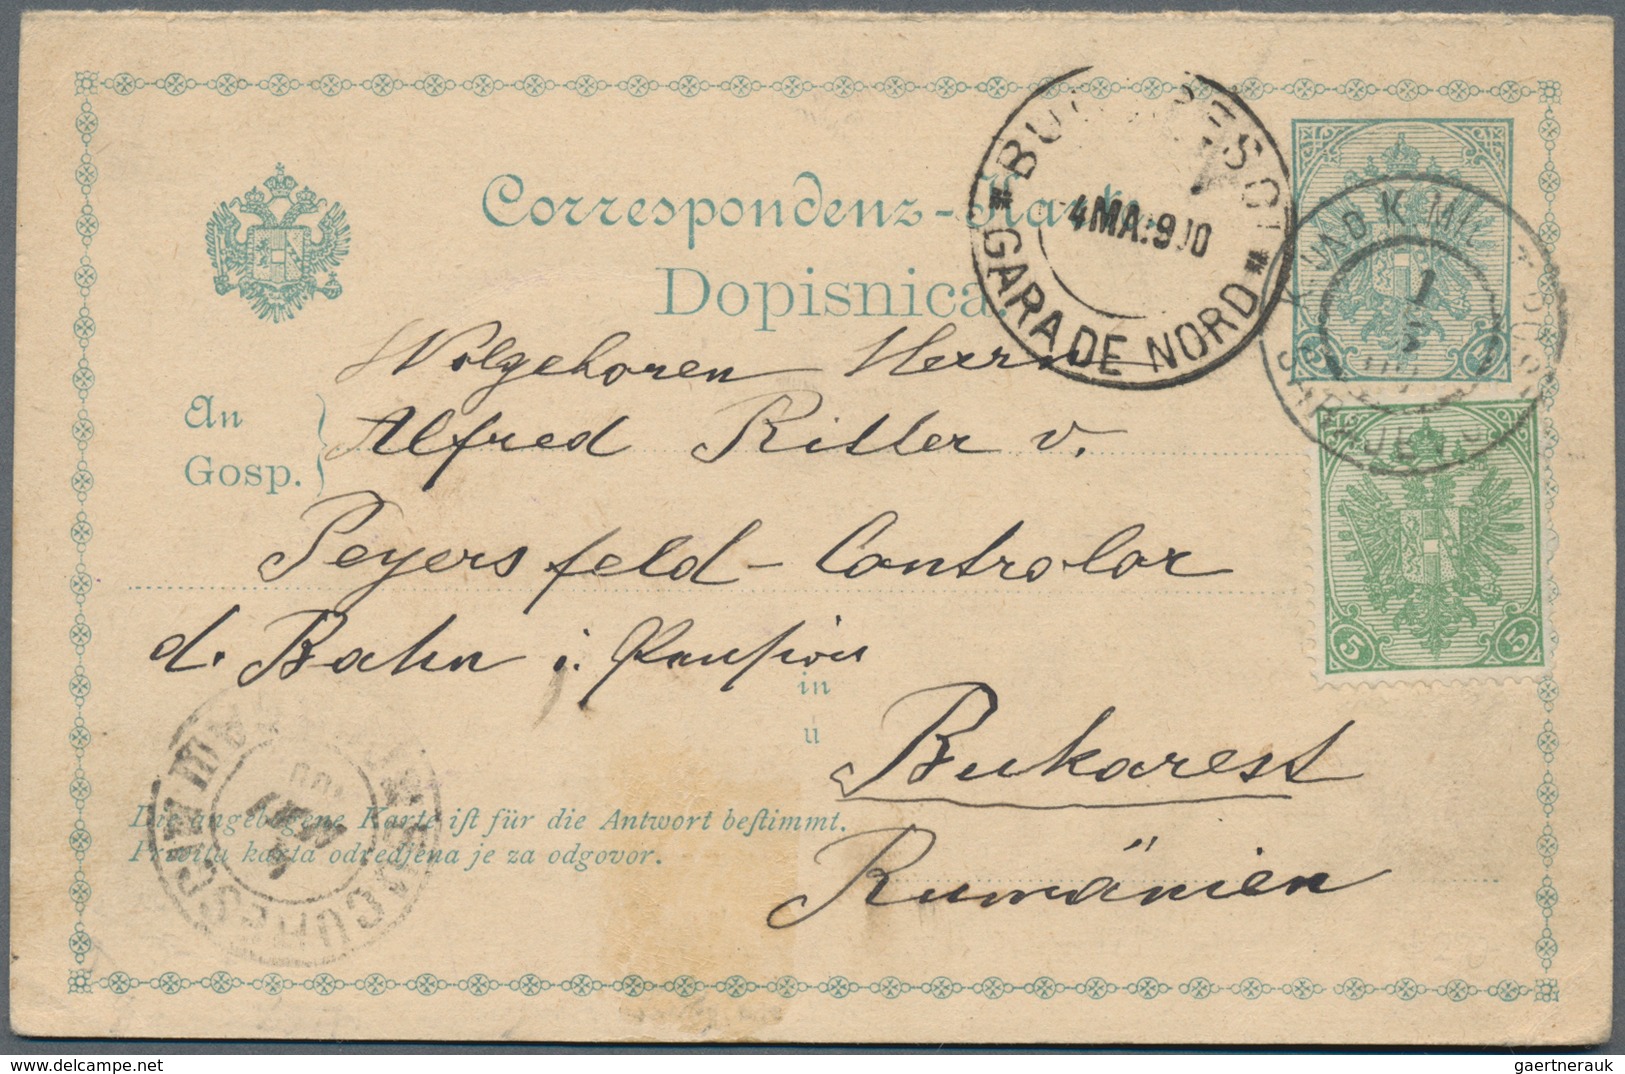 Bosnien Und Herzegowina - Ganzsachen: 1900 P/s Card 5h. Green, Uprated Similar 5h. Green, Used From - Bosnien-Herzegowina